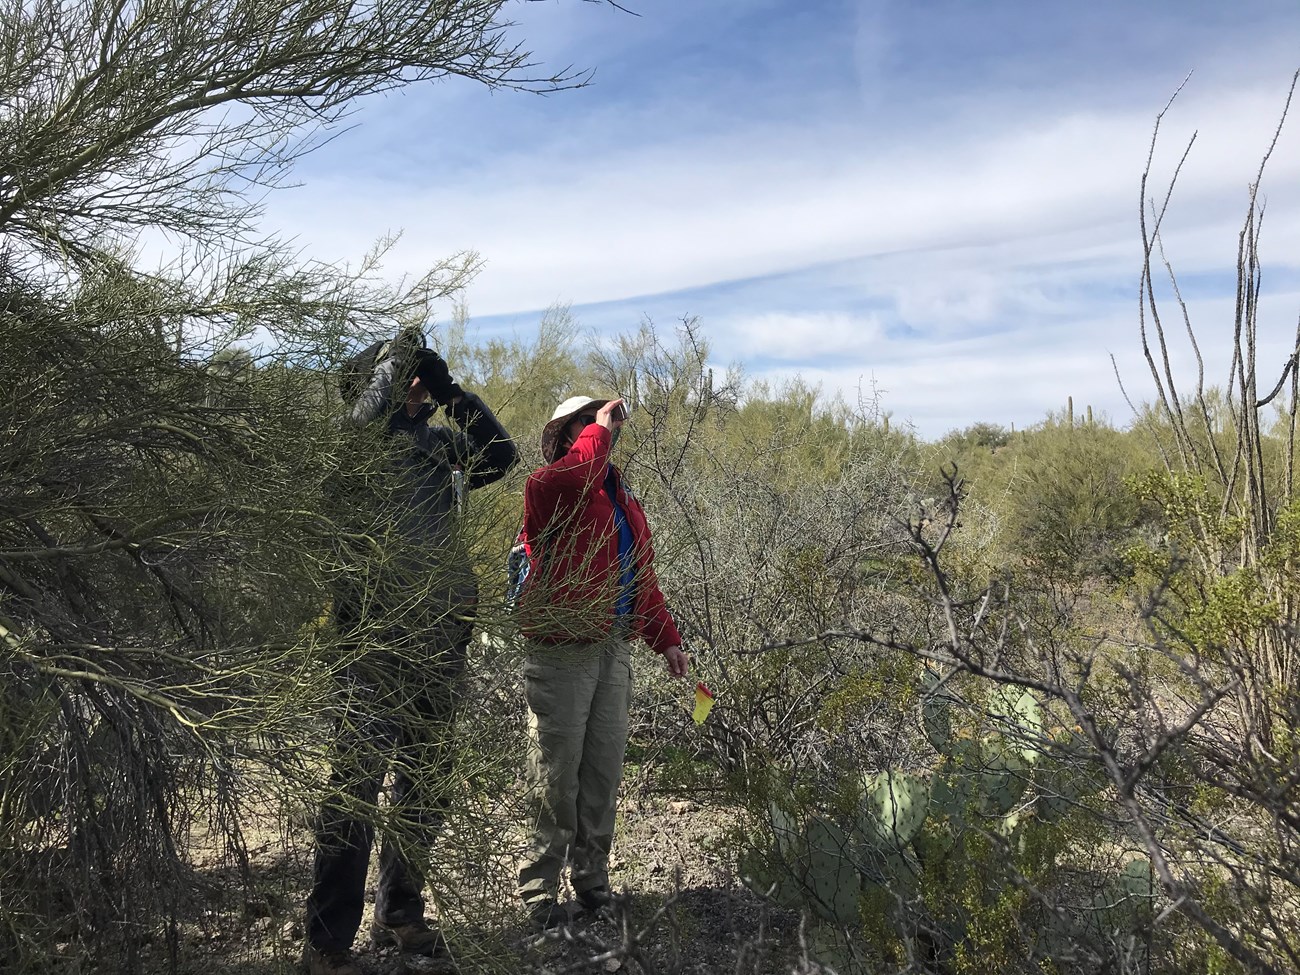 Volunteers use clinometer to measure saguaro